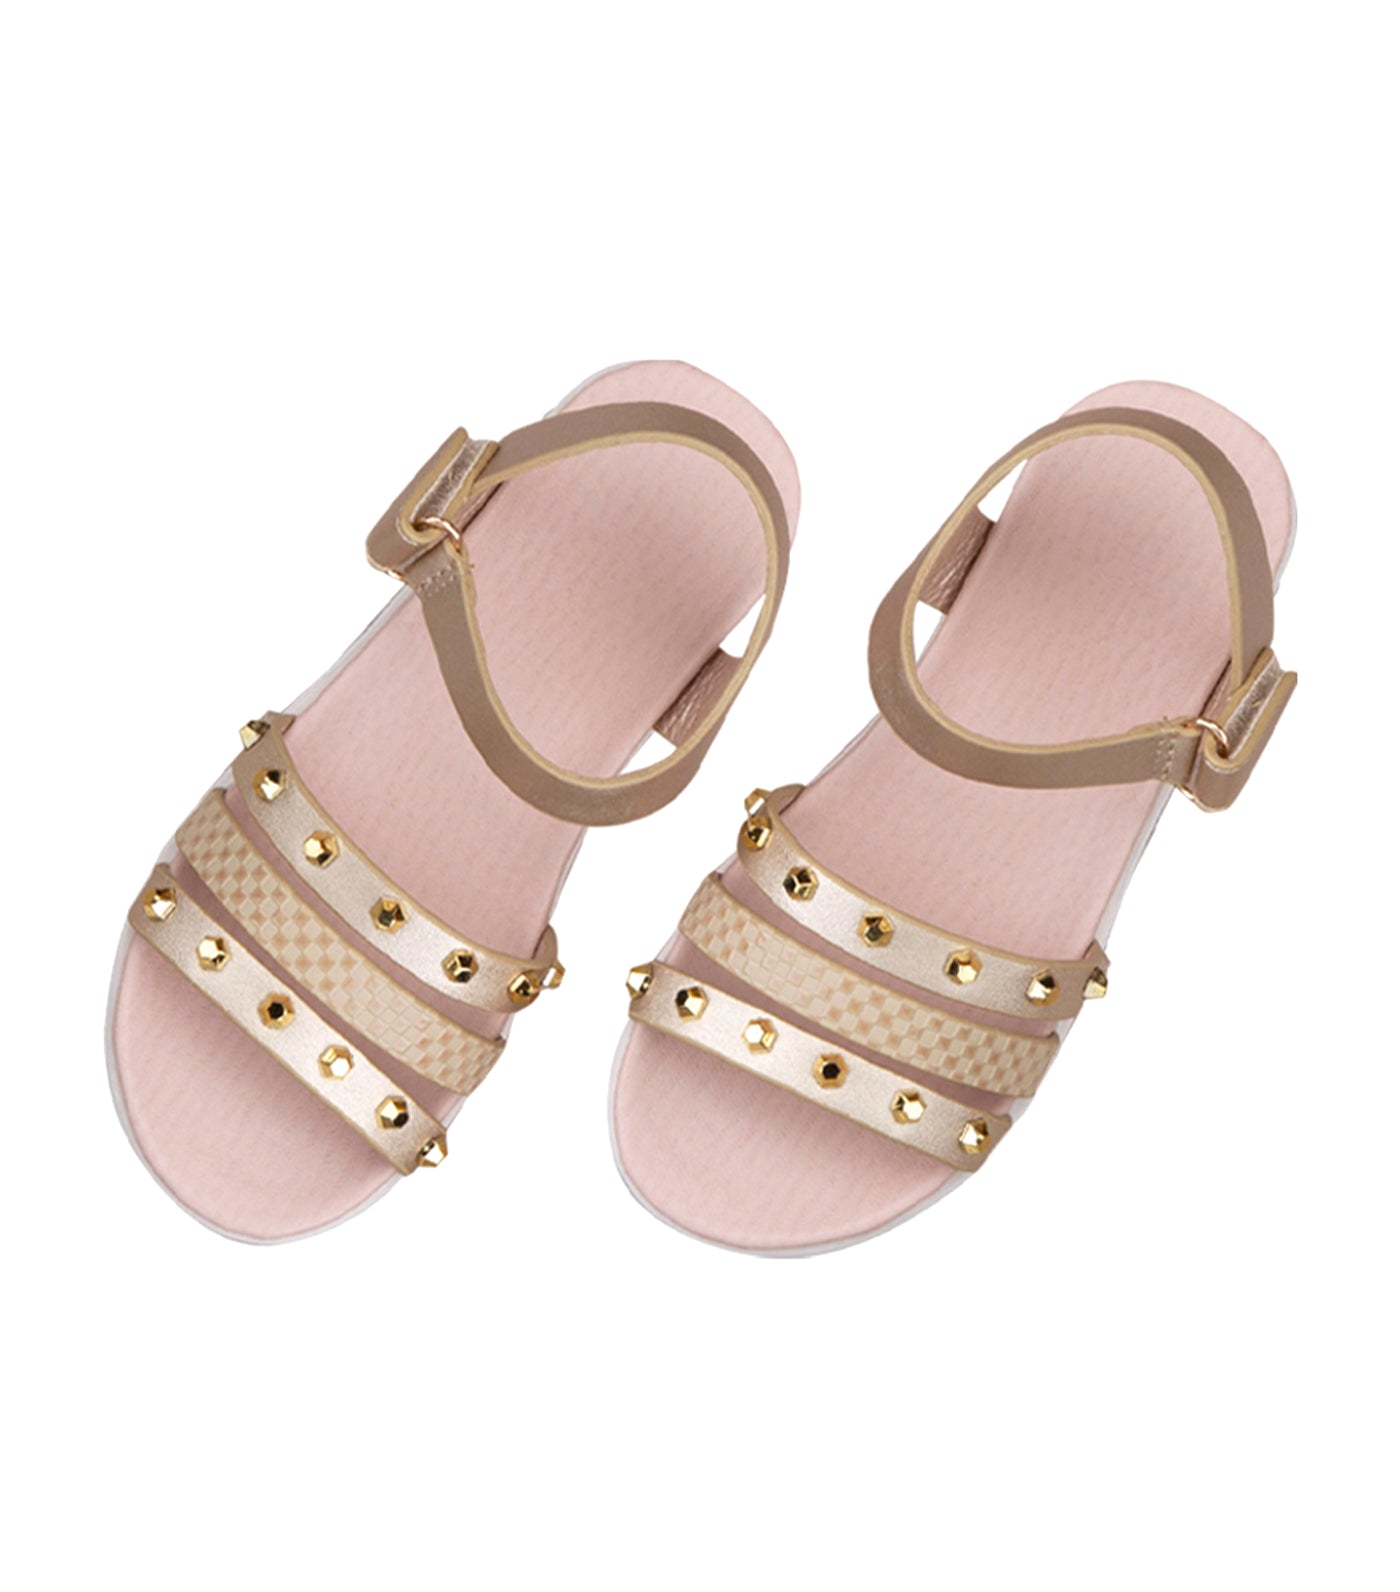 Betts Kids Sandals for Girls - Gold